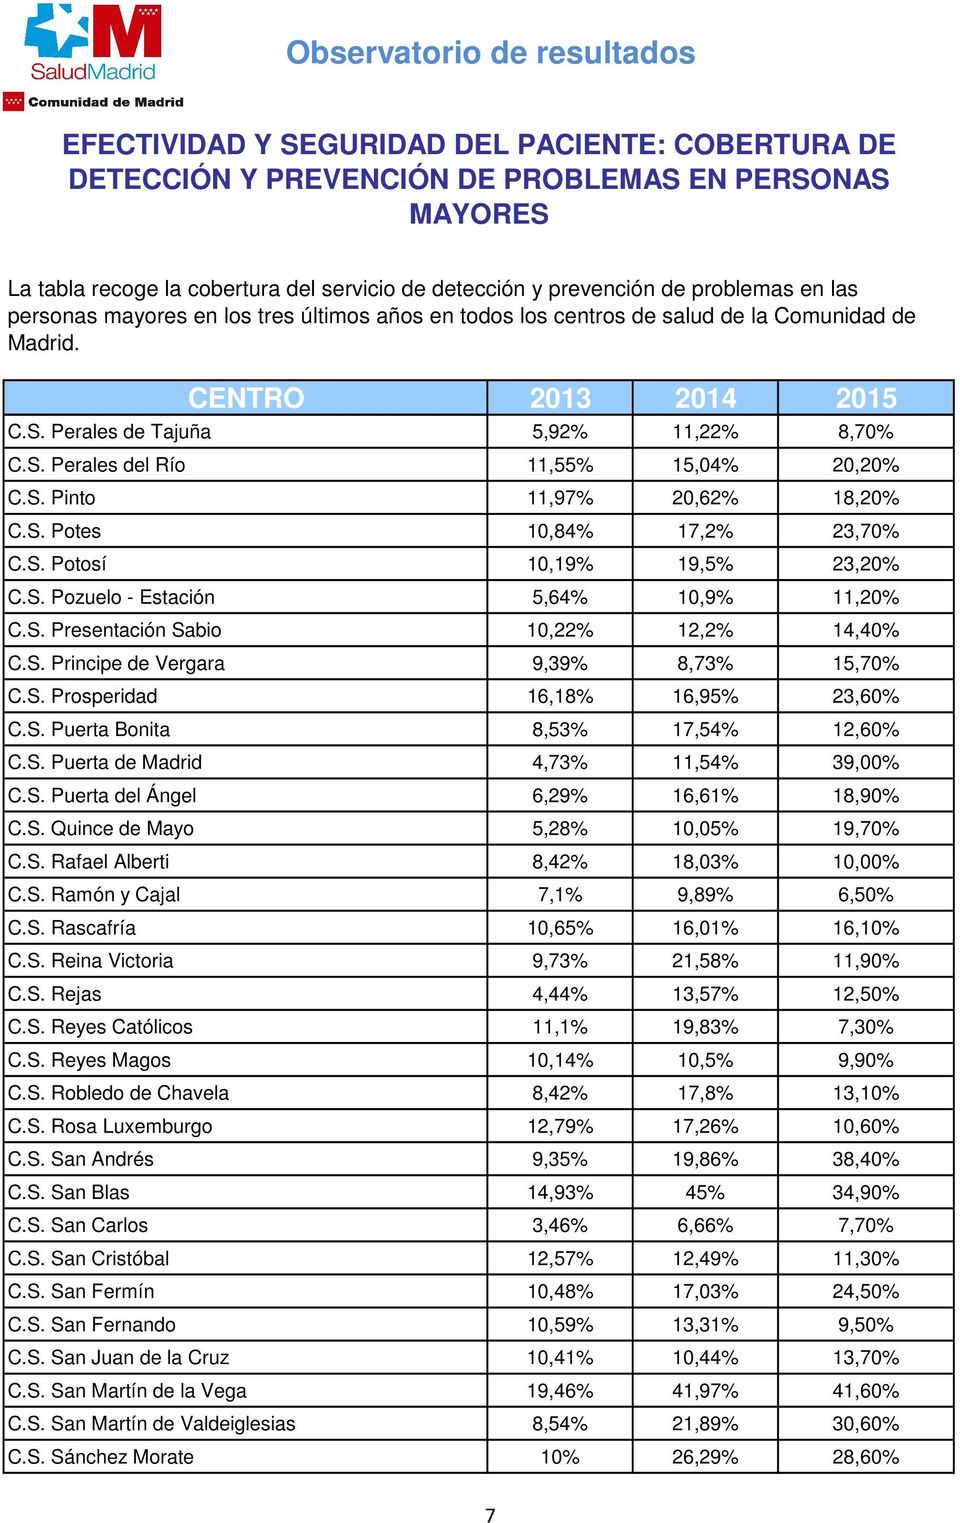 S. Puerta del Ángel 6,29% 16,61% 18,90% C.S. Quince de Mayo 5,28% 10,05% 19,70% C.S. Rafael Alberti 8,42% 18,03% 10,00% C.S. Ramón y Cajal 7,1% 9,89% 6,50% C.S. Rascafría 10,65% 16,01% 16,10% C.S. Reina Victoria 9,73% 21,58% 11,90% C.